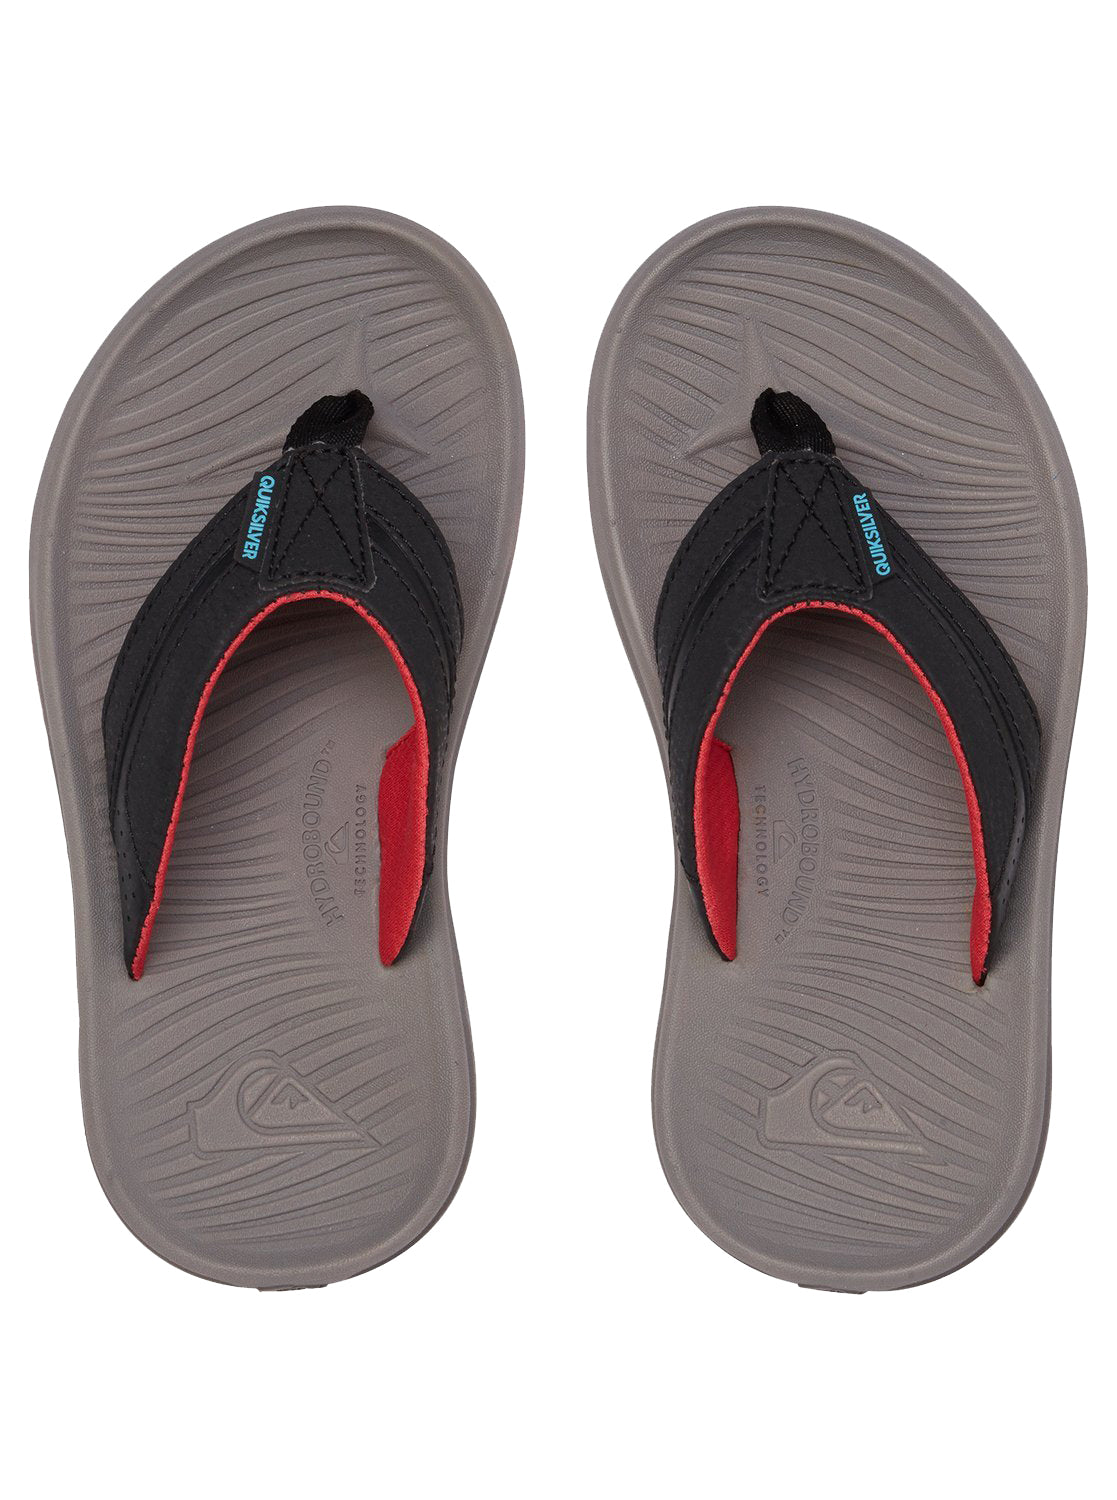 Quiksilver Oasis Youth Sandals XKSR-Black-Grey-Red 11 C